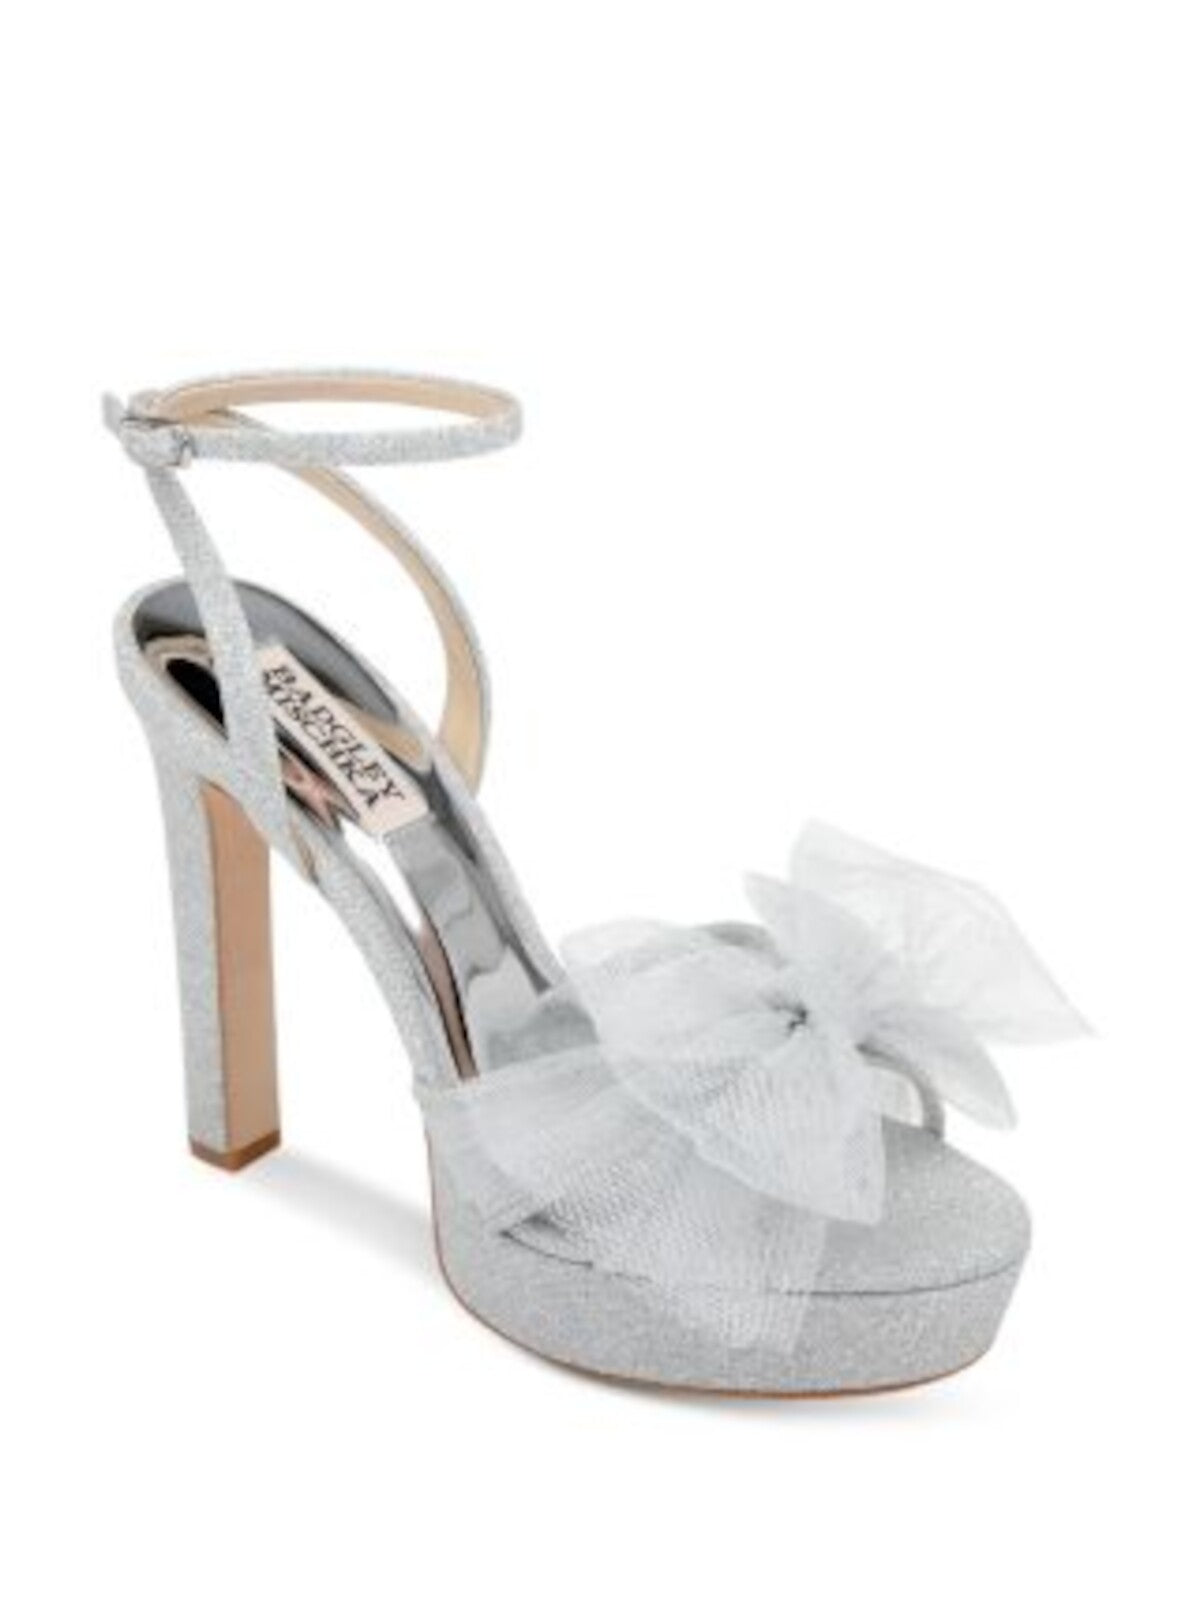 BADGLEY MISCHKA Womens Silver 1" Platform Bow Accent Adjustable Sophie Open Toe Buckle Dress Heeled Sandal 7 M